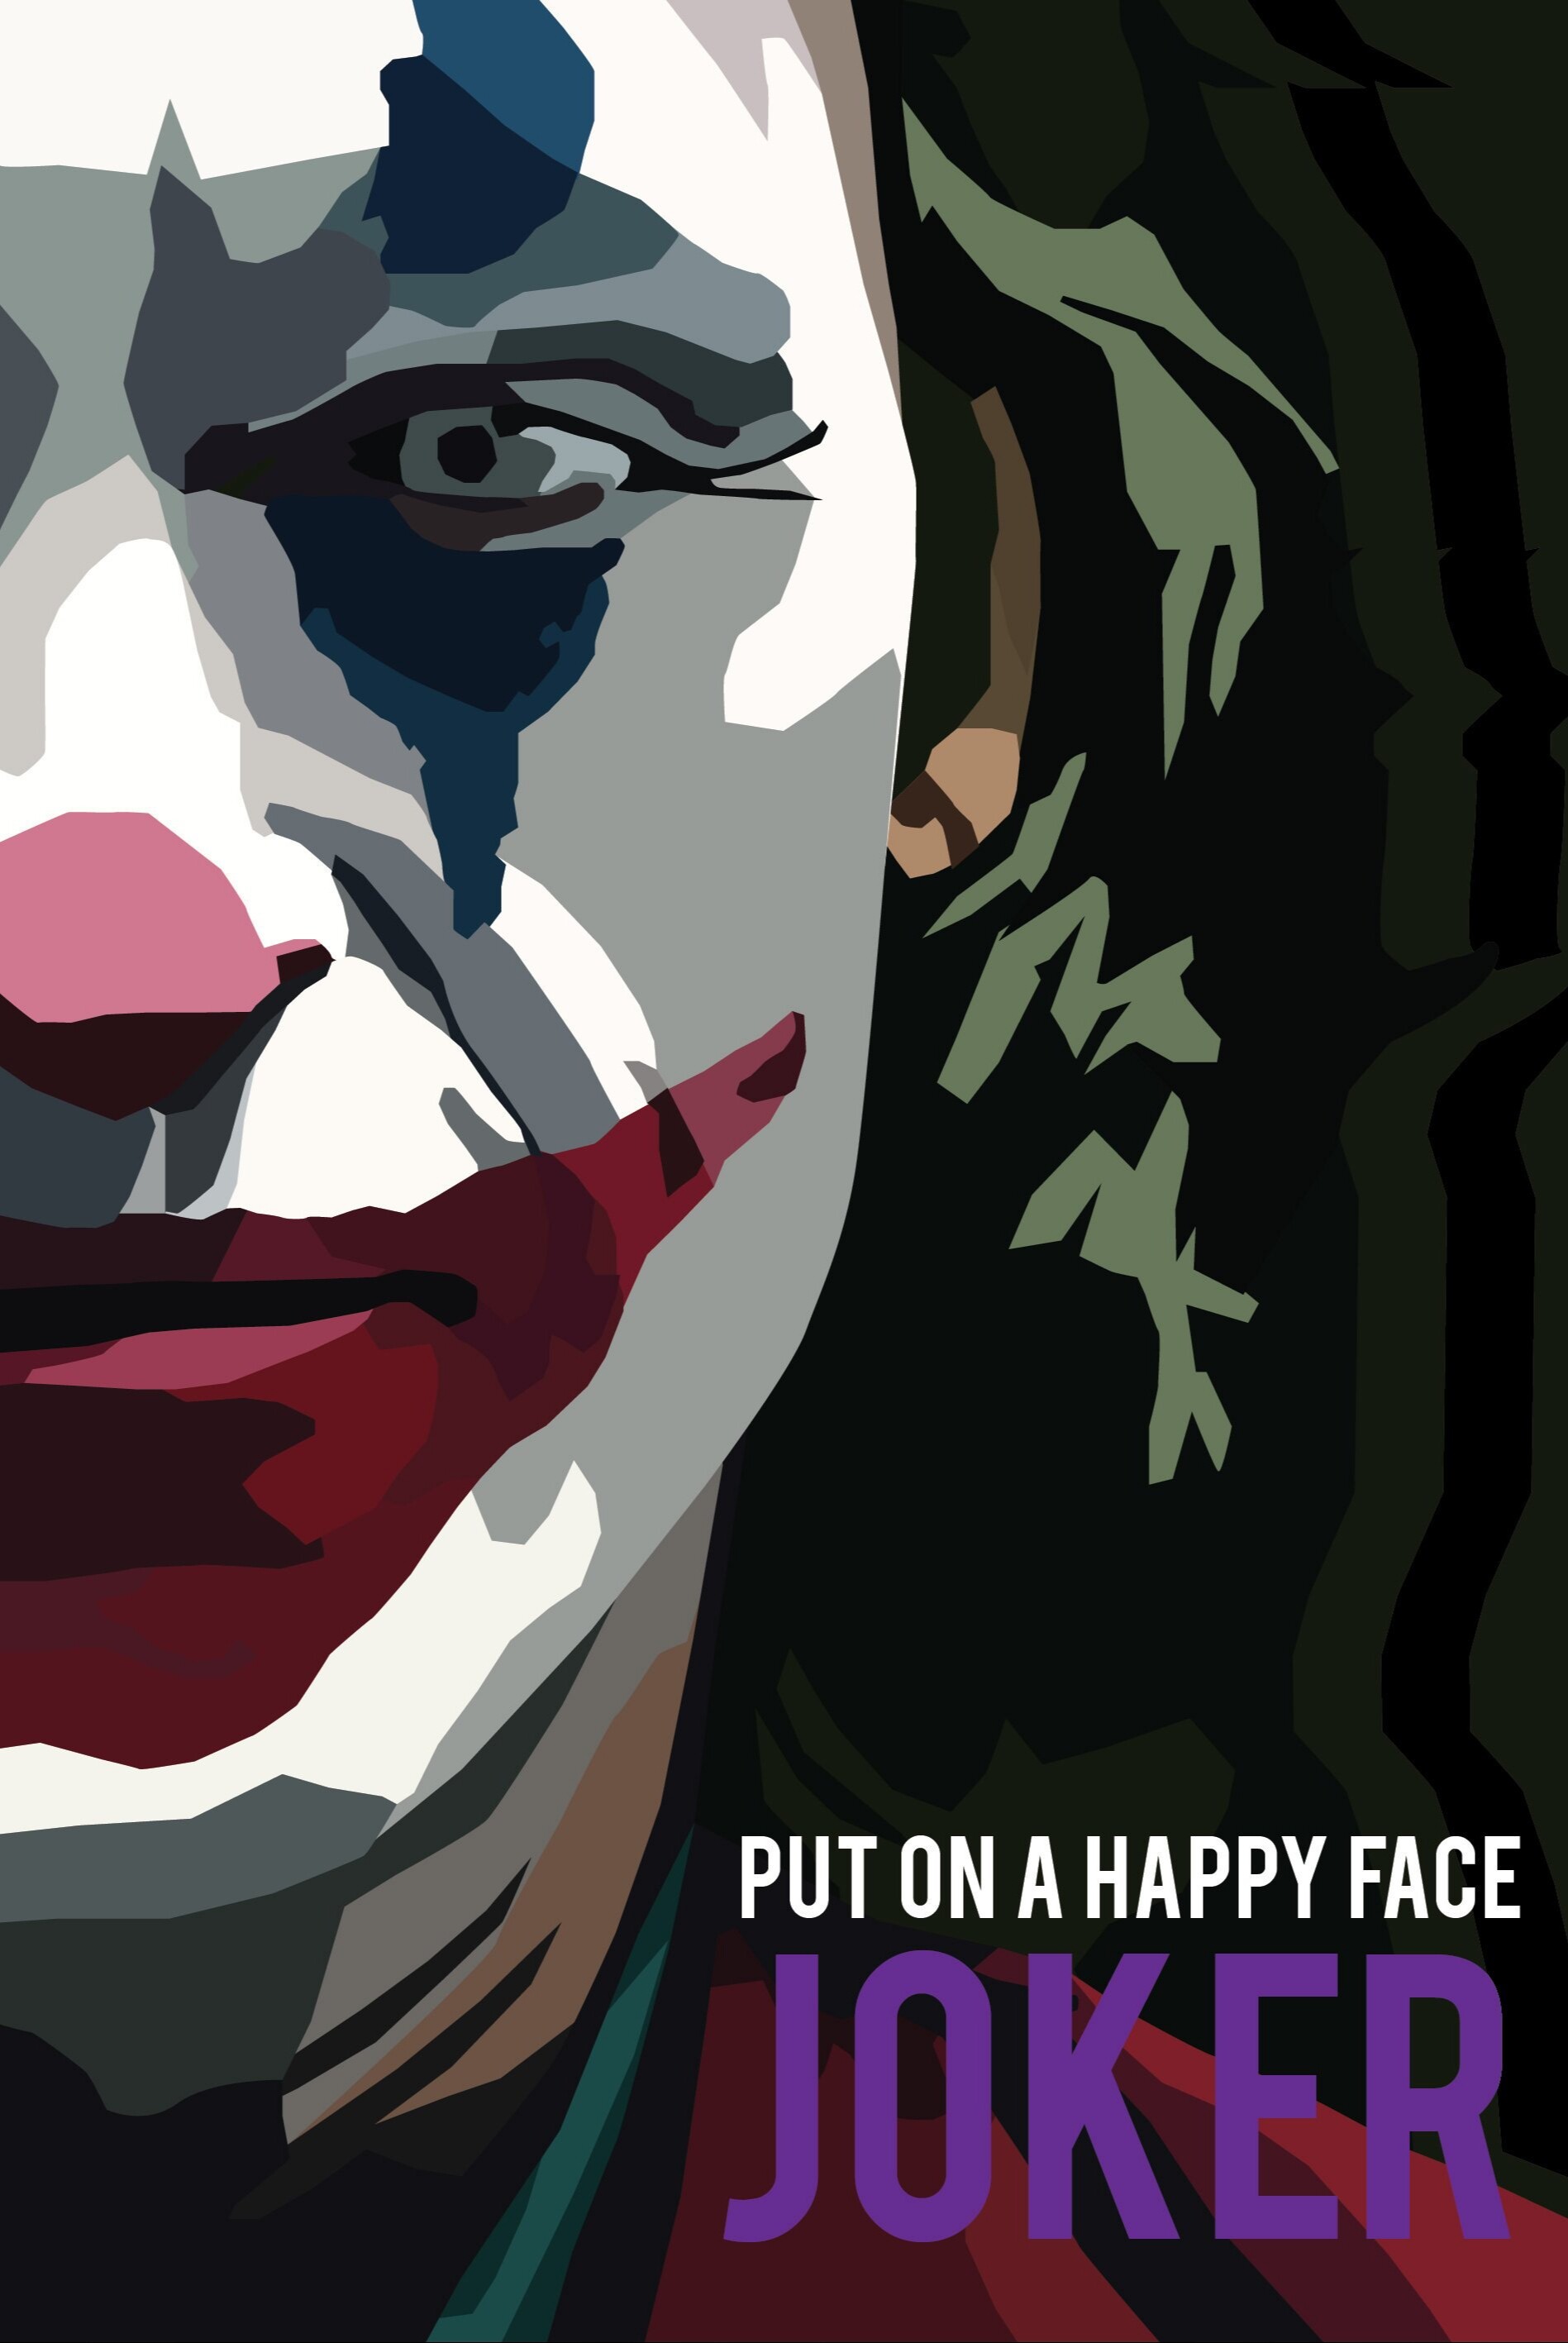 ArtStation - Joker movie poster - Joaquin Phoenix